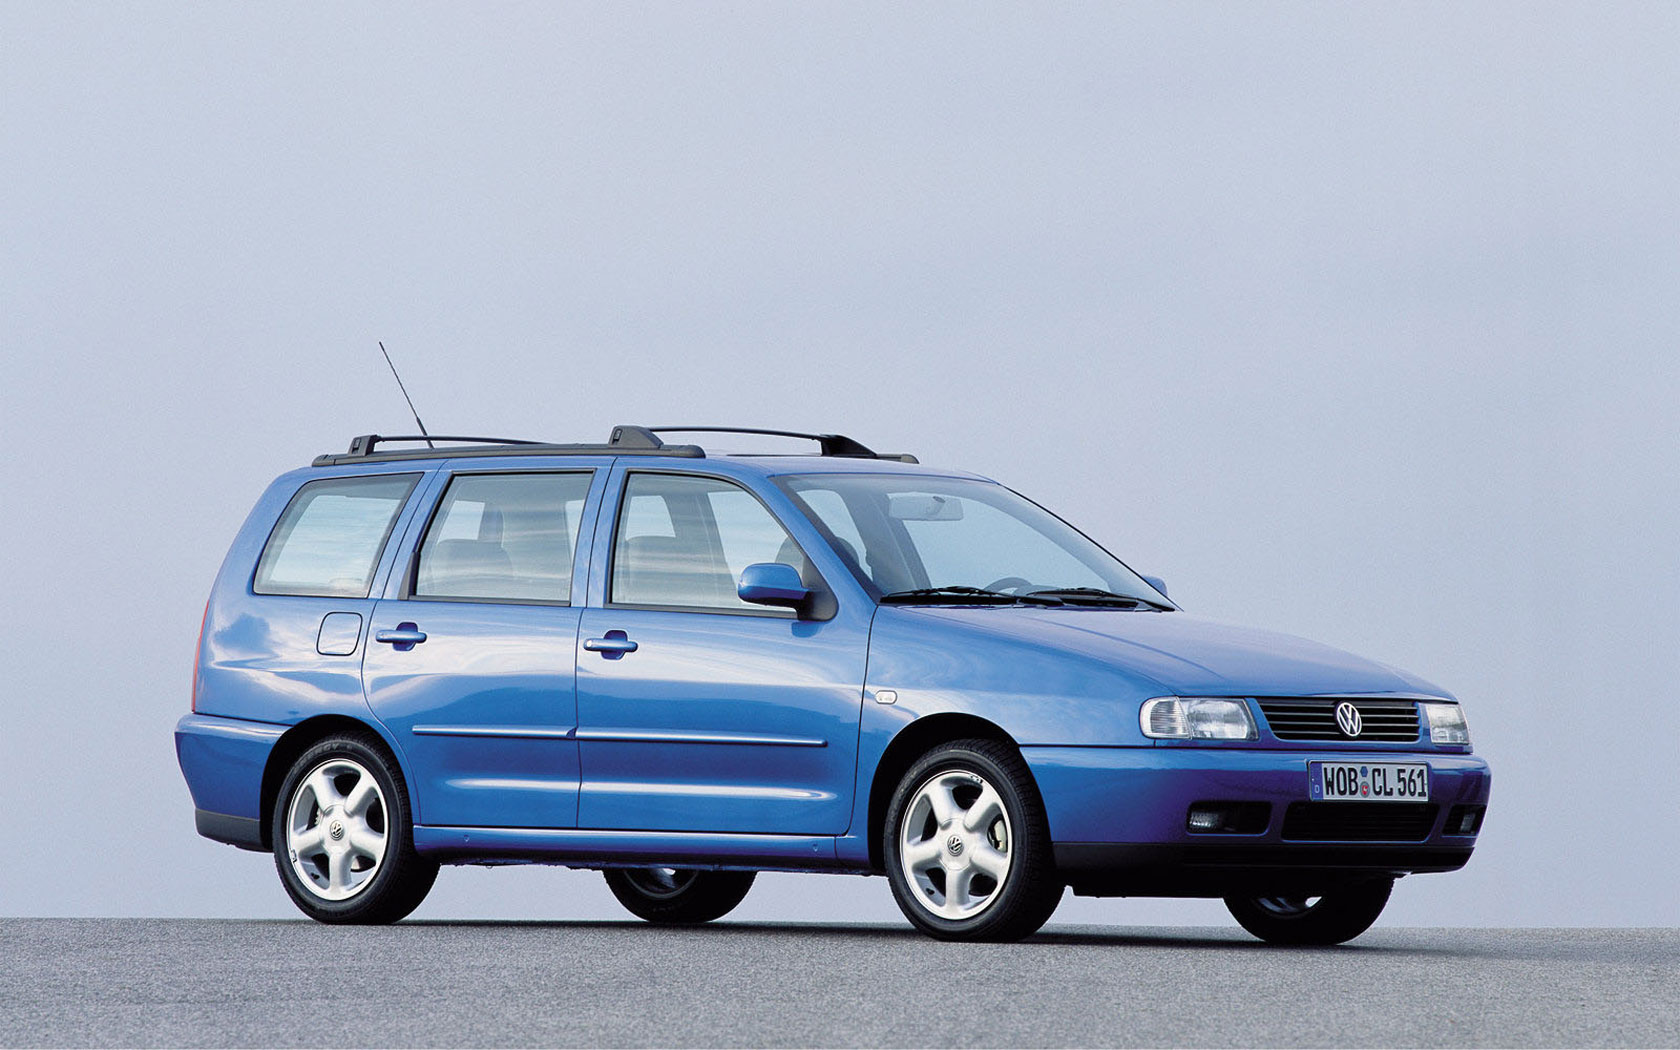  Volkswagen Polo Variant (1999-2001)